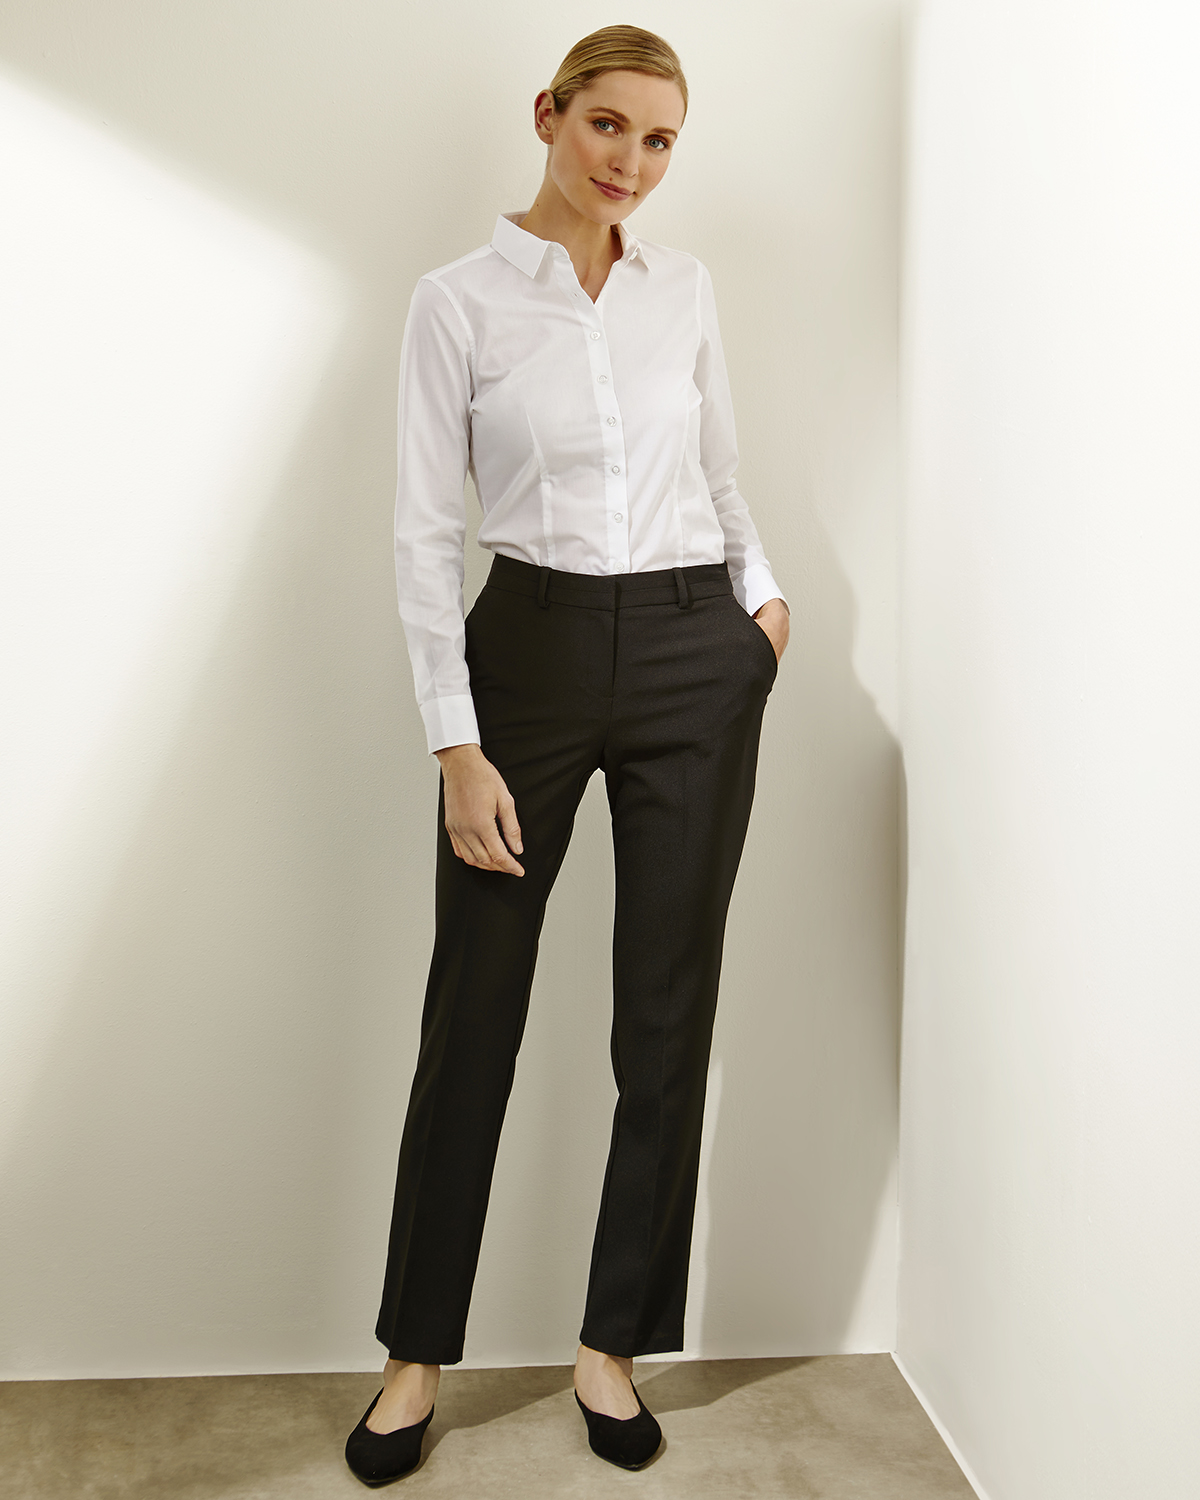 Buy Plus Size Black Formal Pant  Plus Size Formal Pants For Women Apella